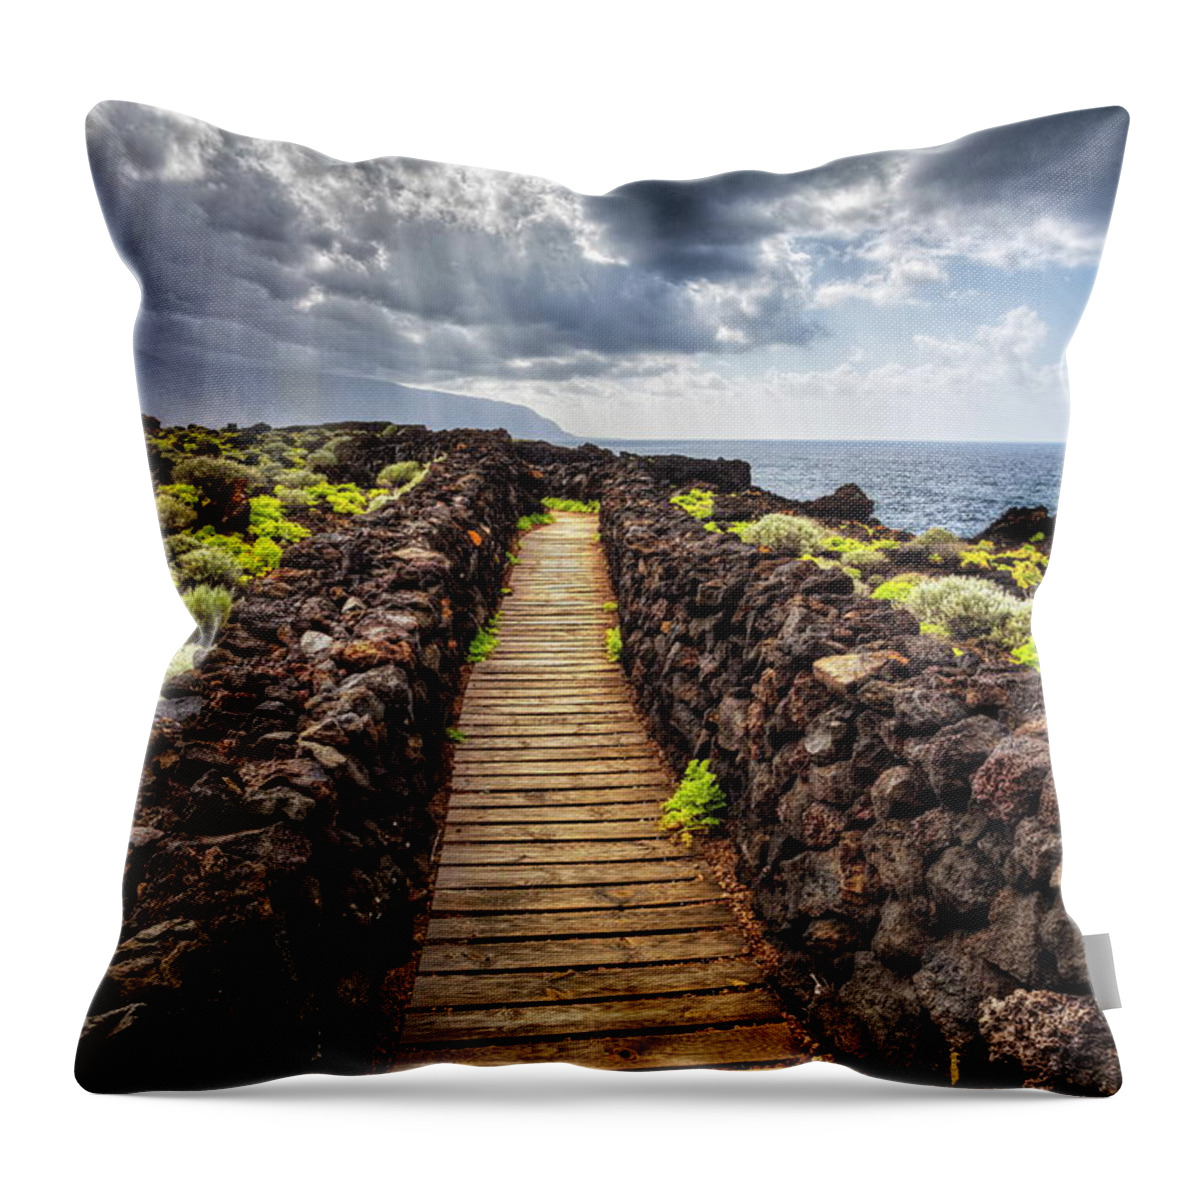 Estock Throw Pillow featuring the digital art Coastal Footpath, Canary Islands, Spain by Reinhard Schmid